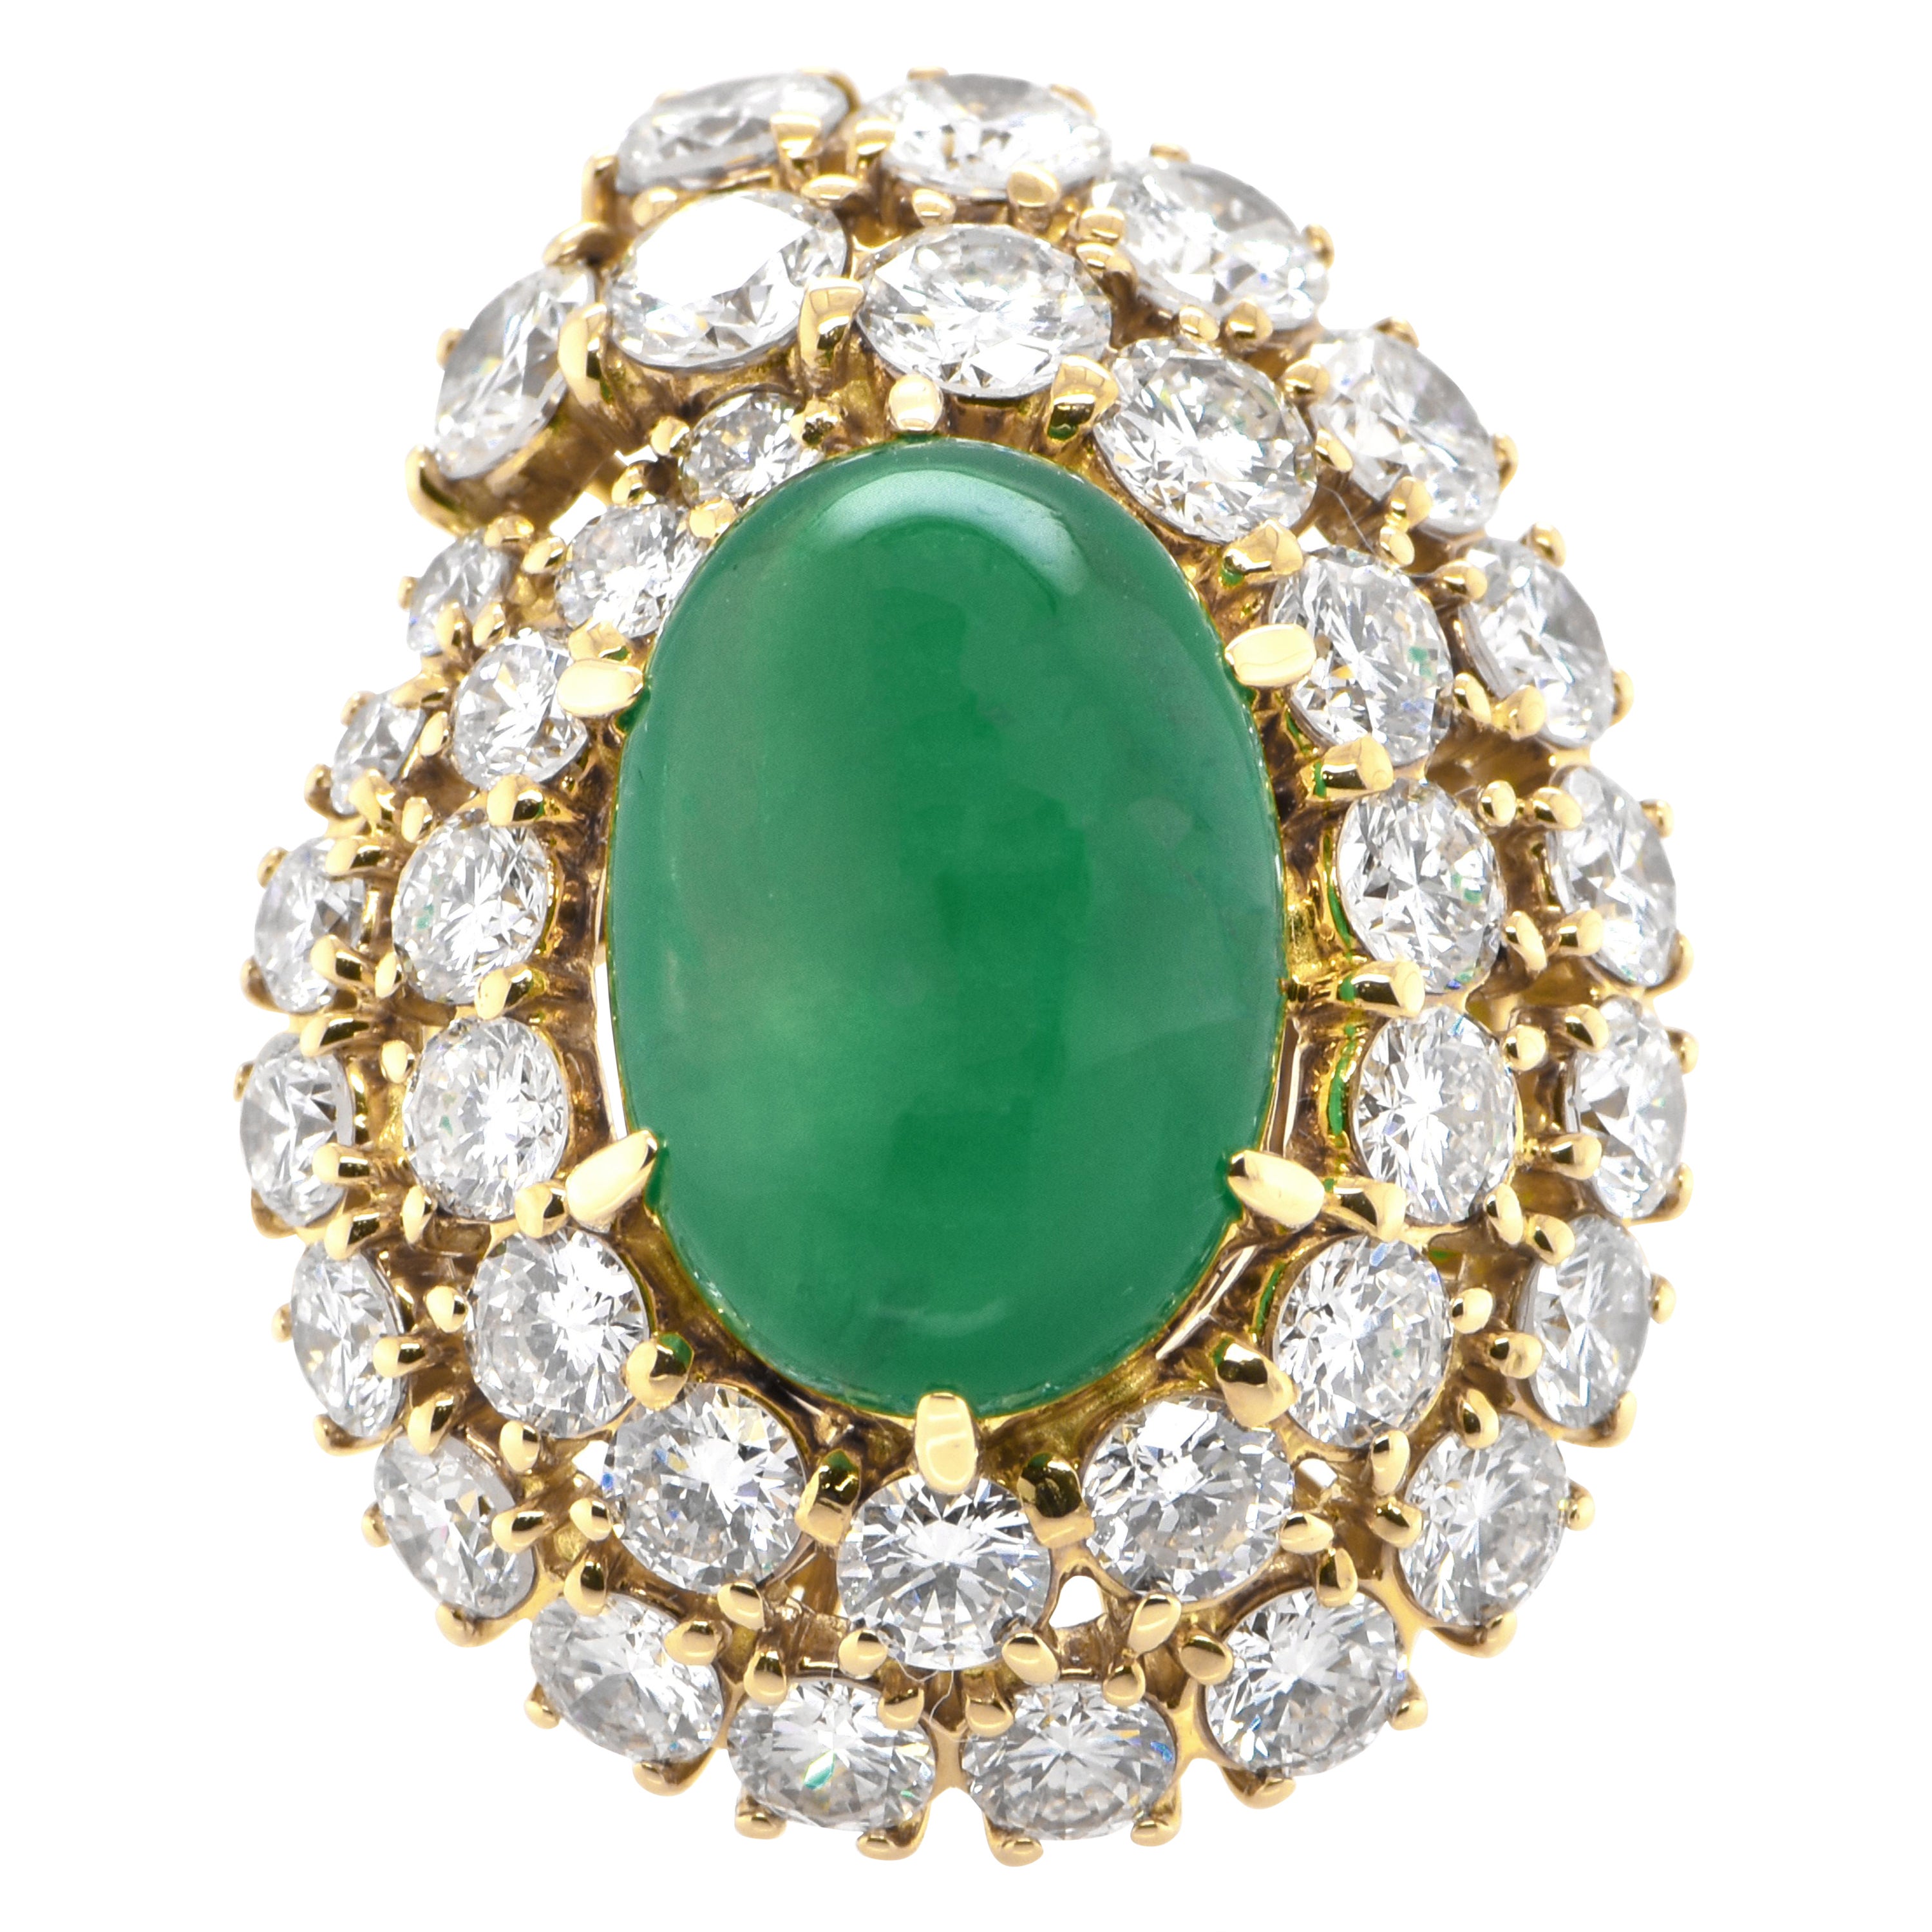 5.30 Carat Natural Emerald Cabochon and Diamond Ring Set in 18 Karat Gold